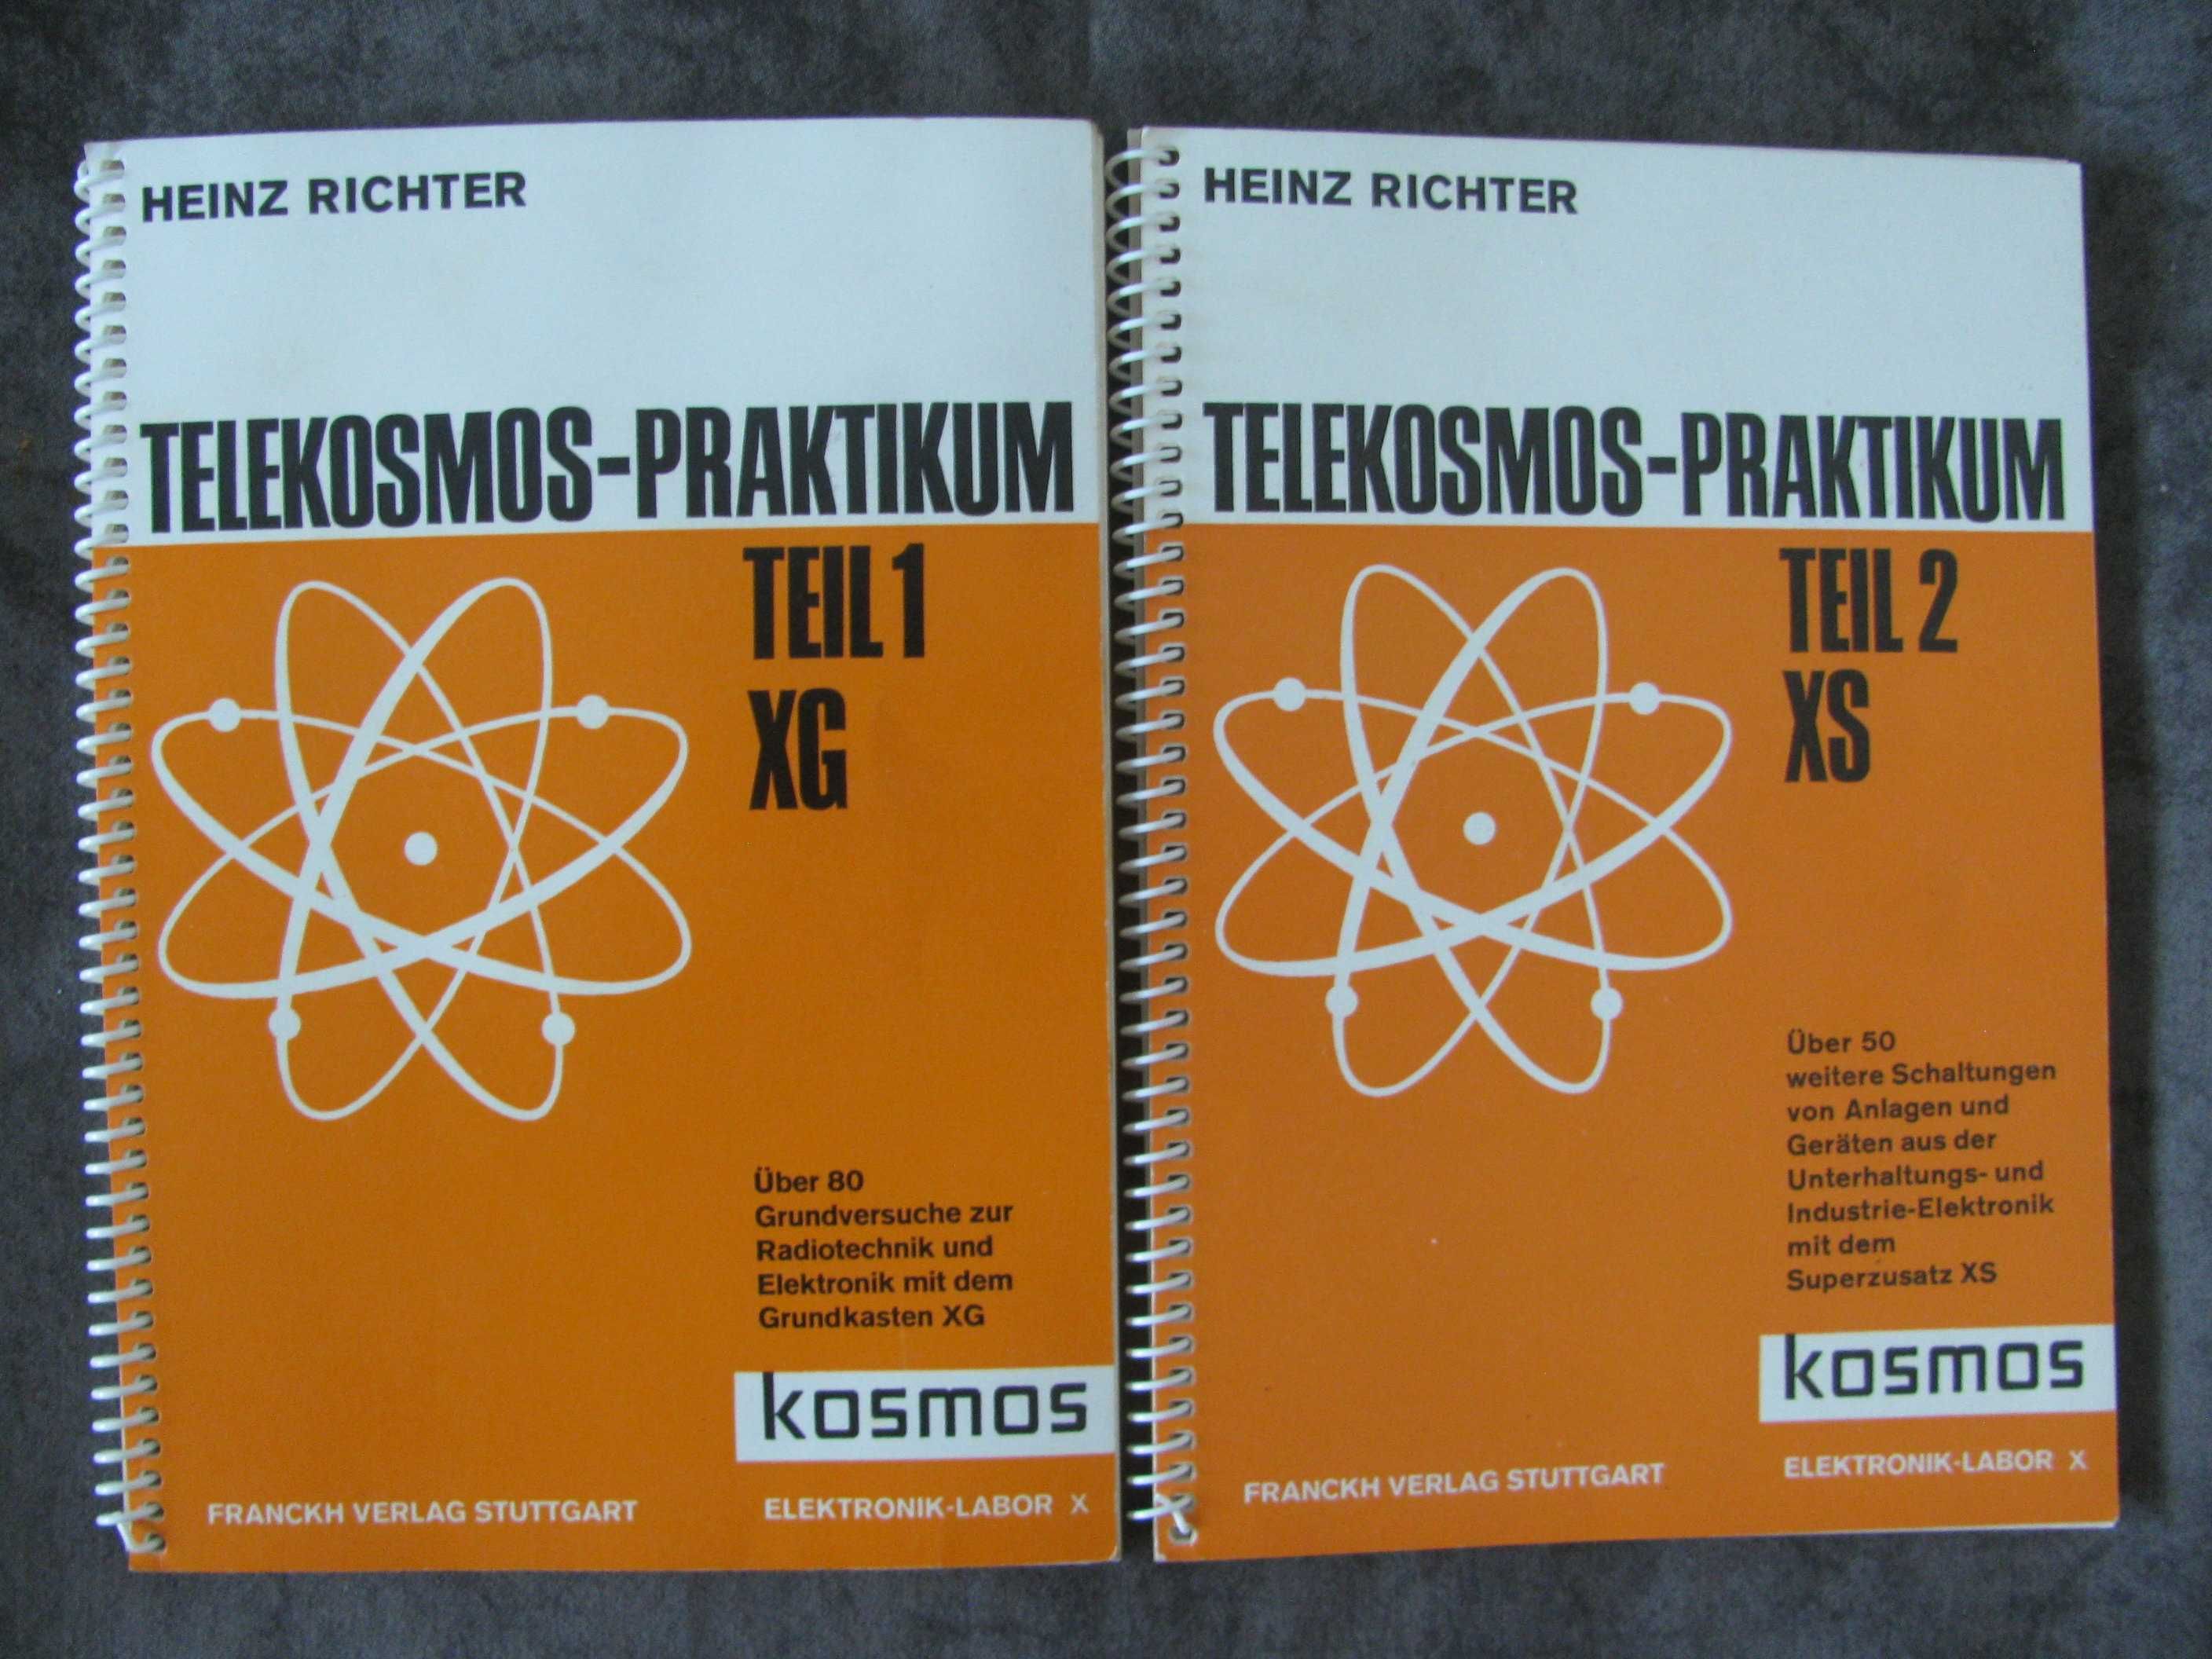 HEINZ RICHTER - Telecosmos- Praktikum  TEIL1 XG , TEIL 2 XS